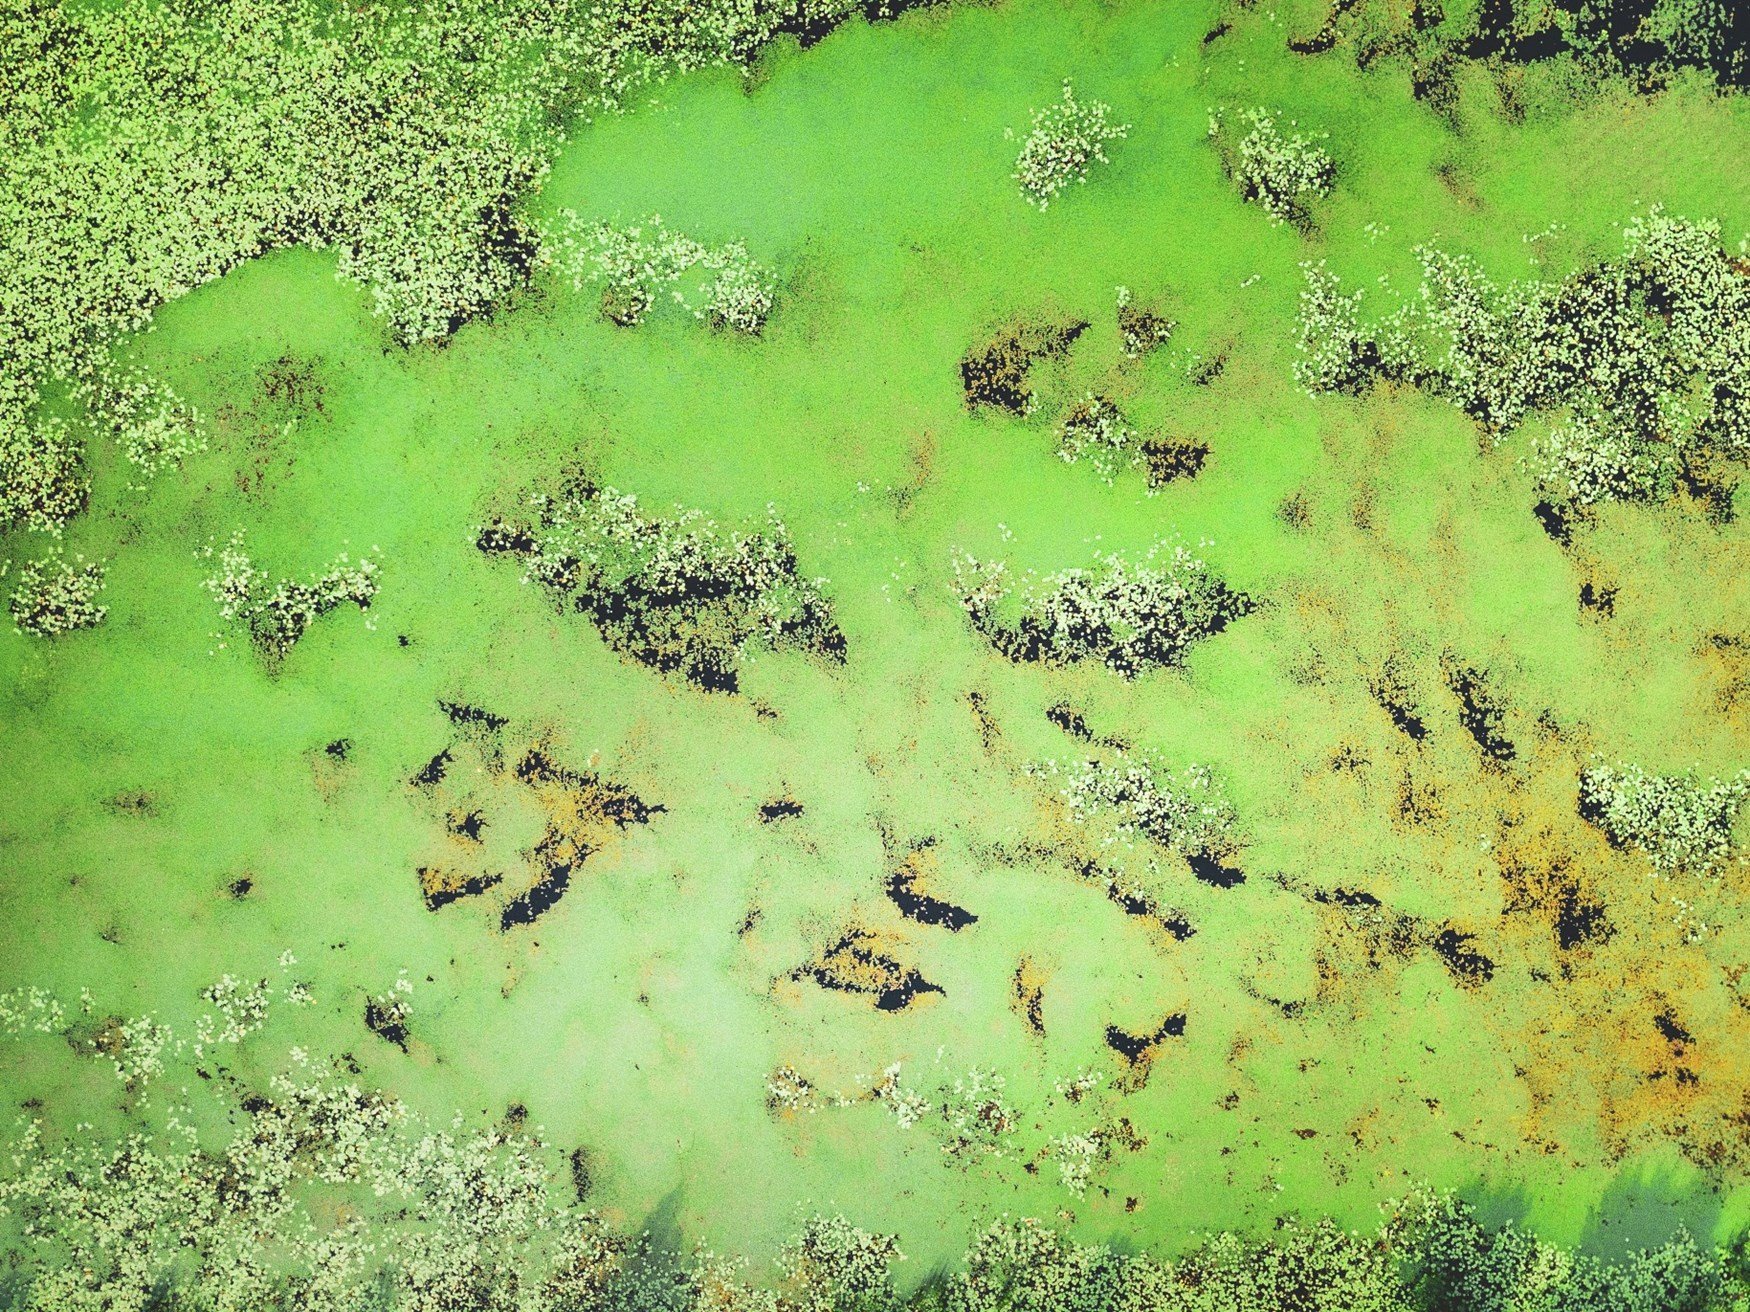 Aerial view of green algae